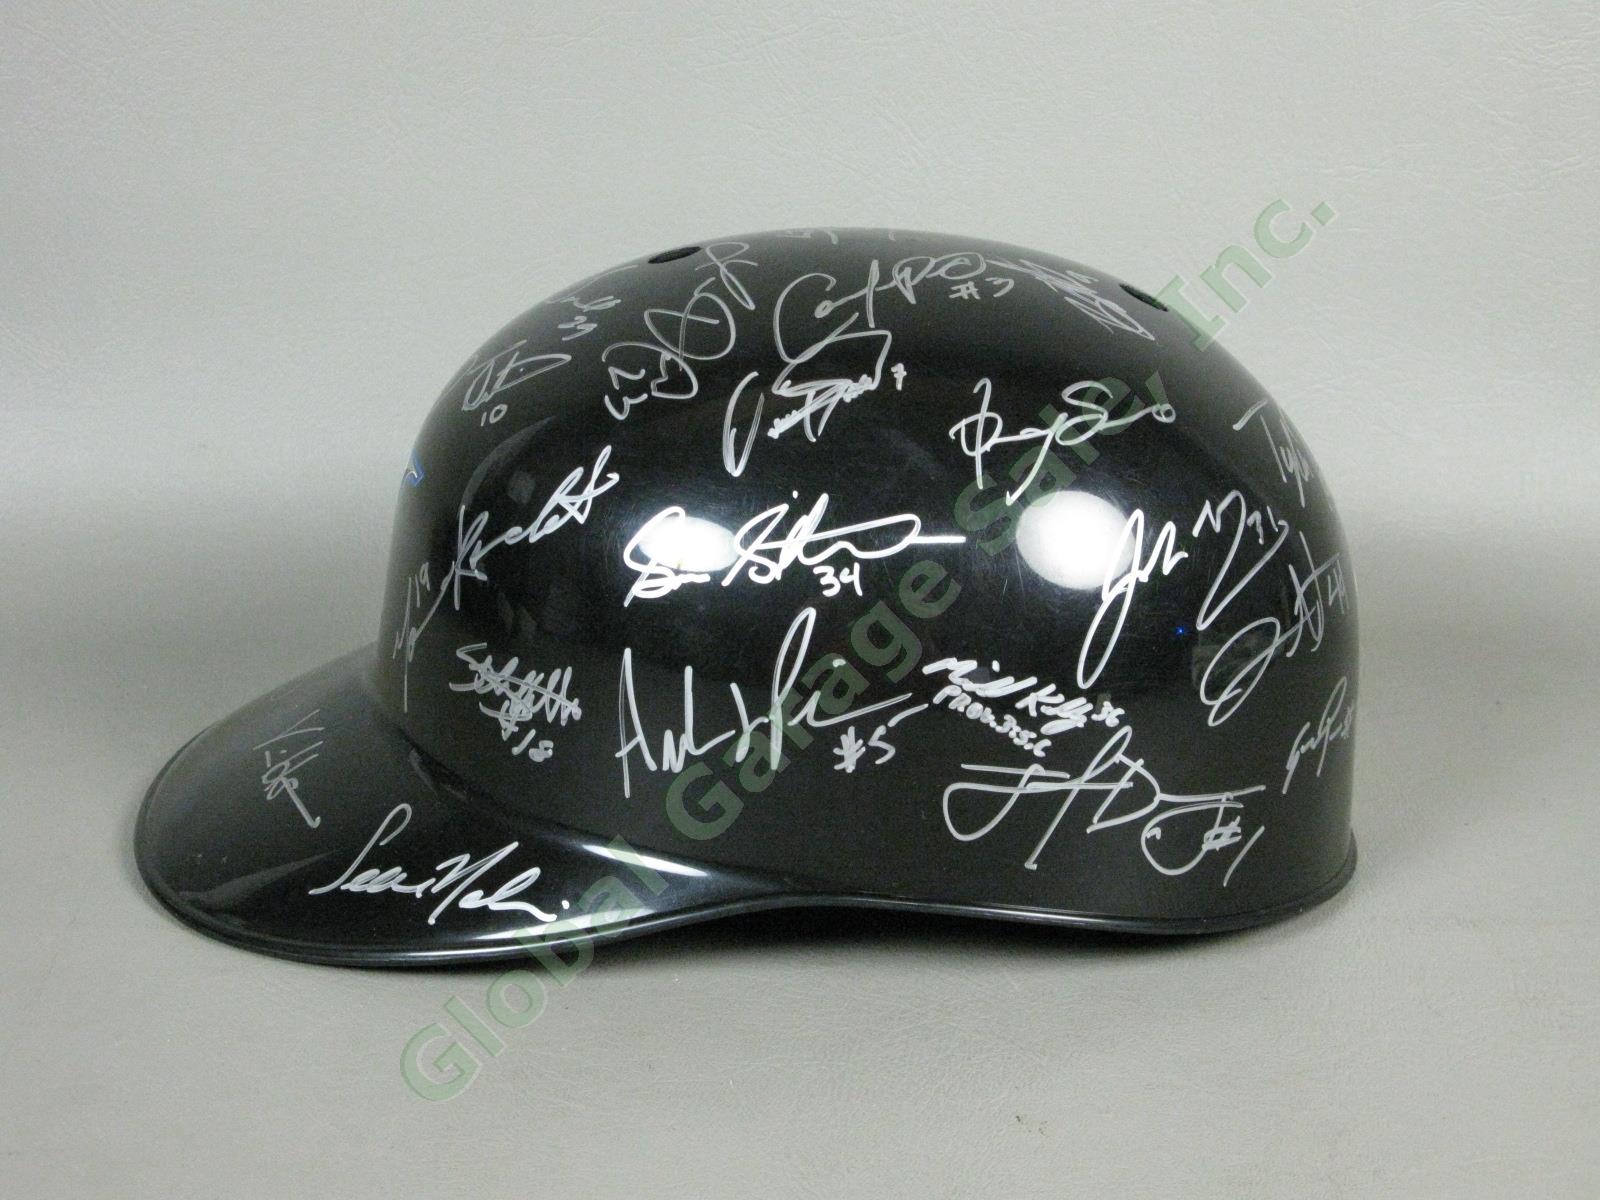 2010 Auburn Doubledays Team Signed Baseball Helmet NYPL Toronto Blue Jays NR 3